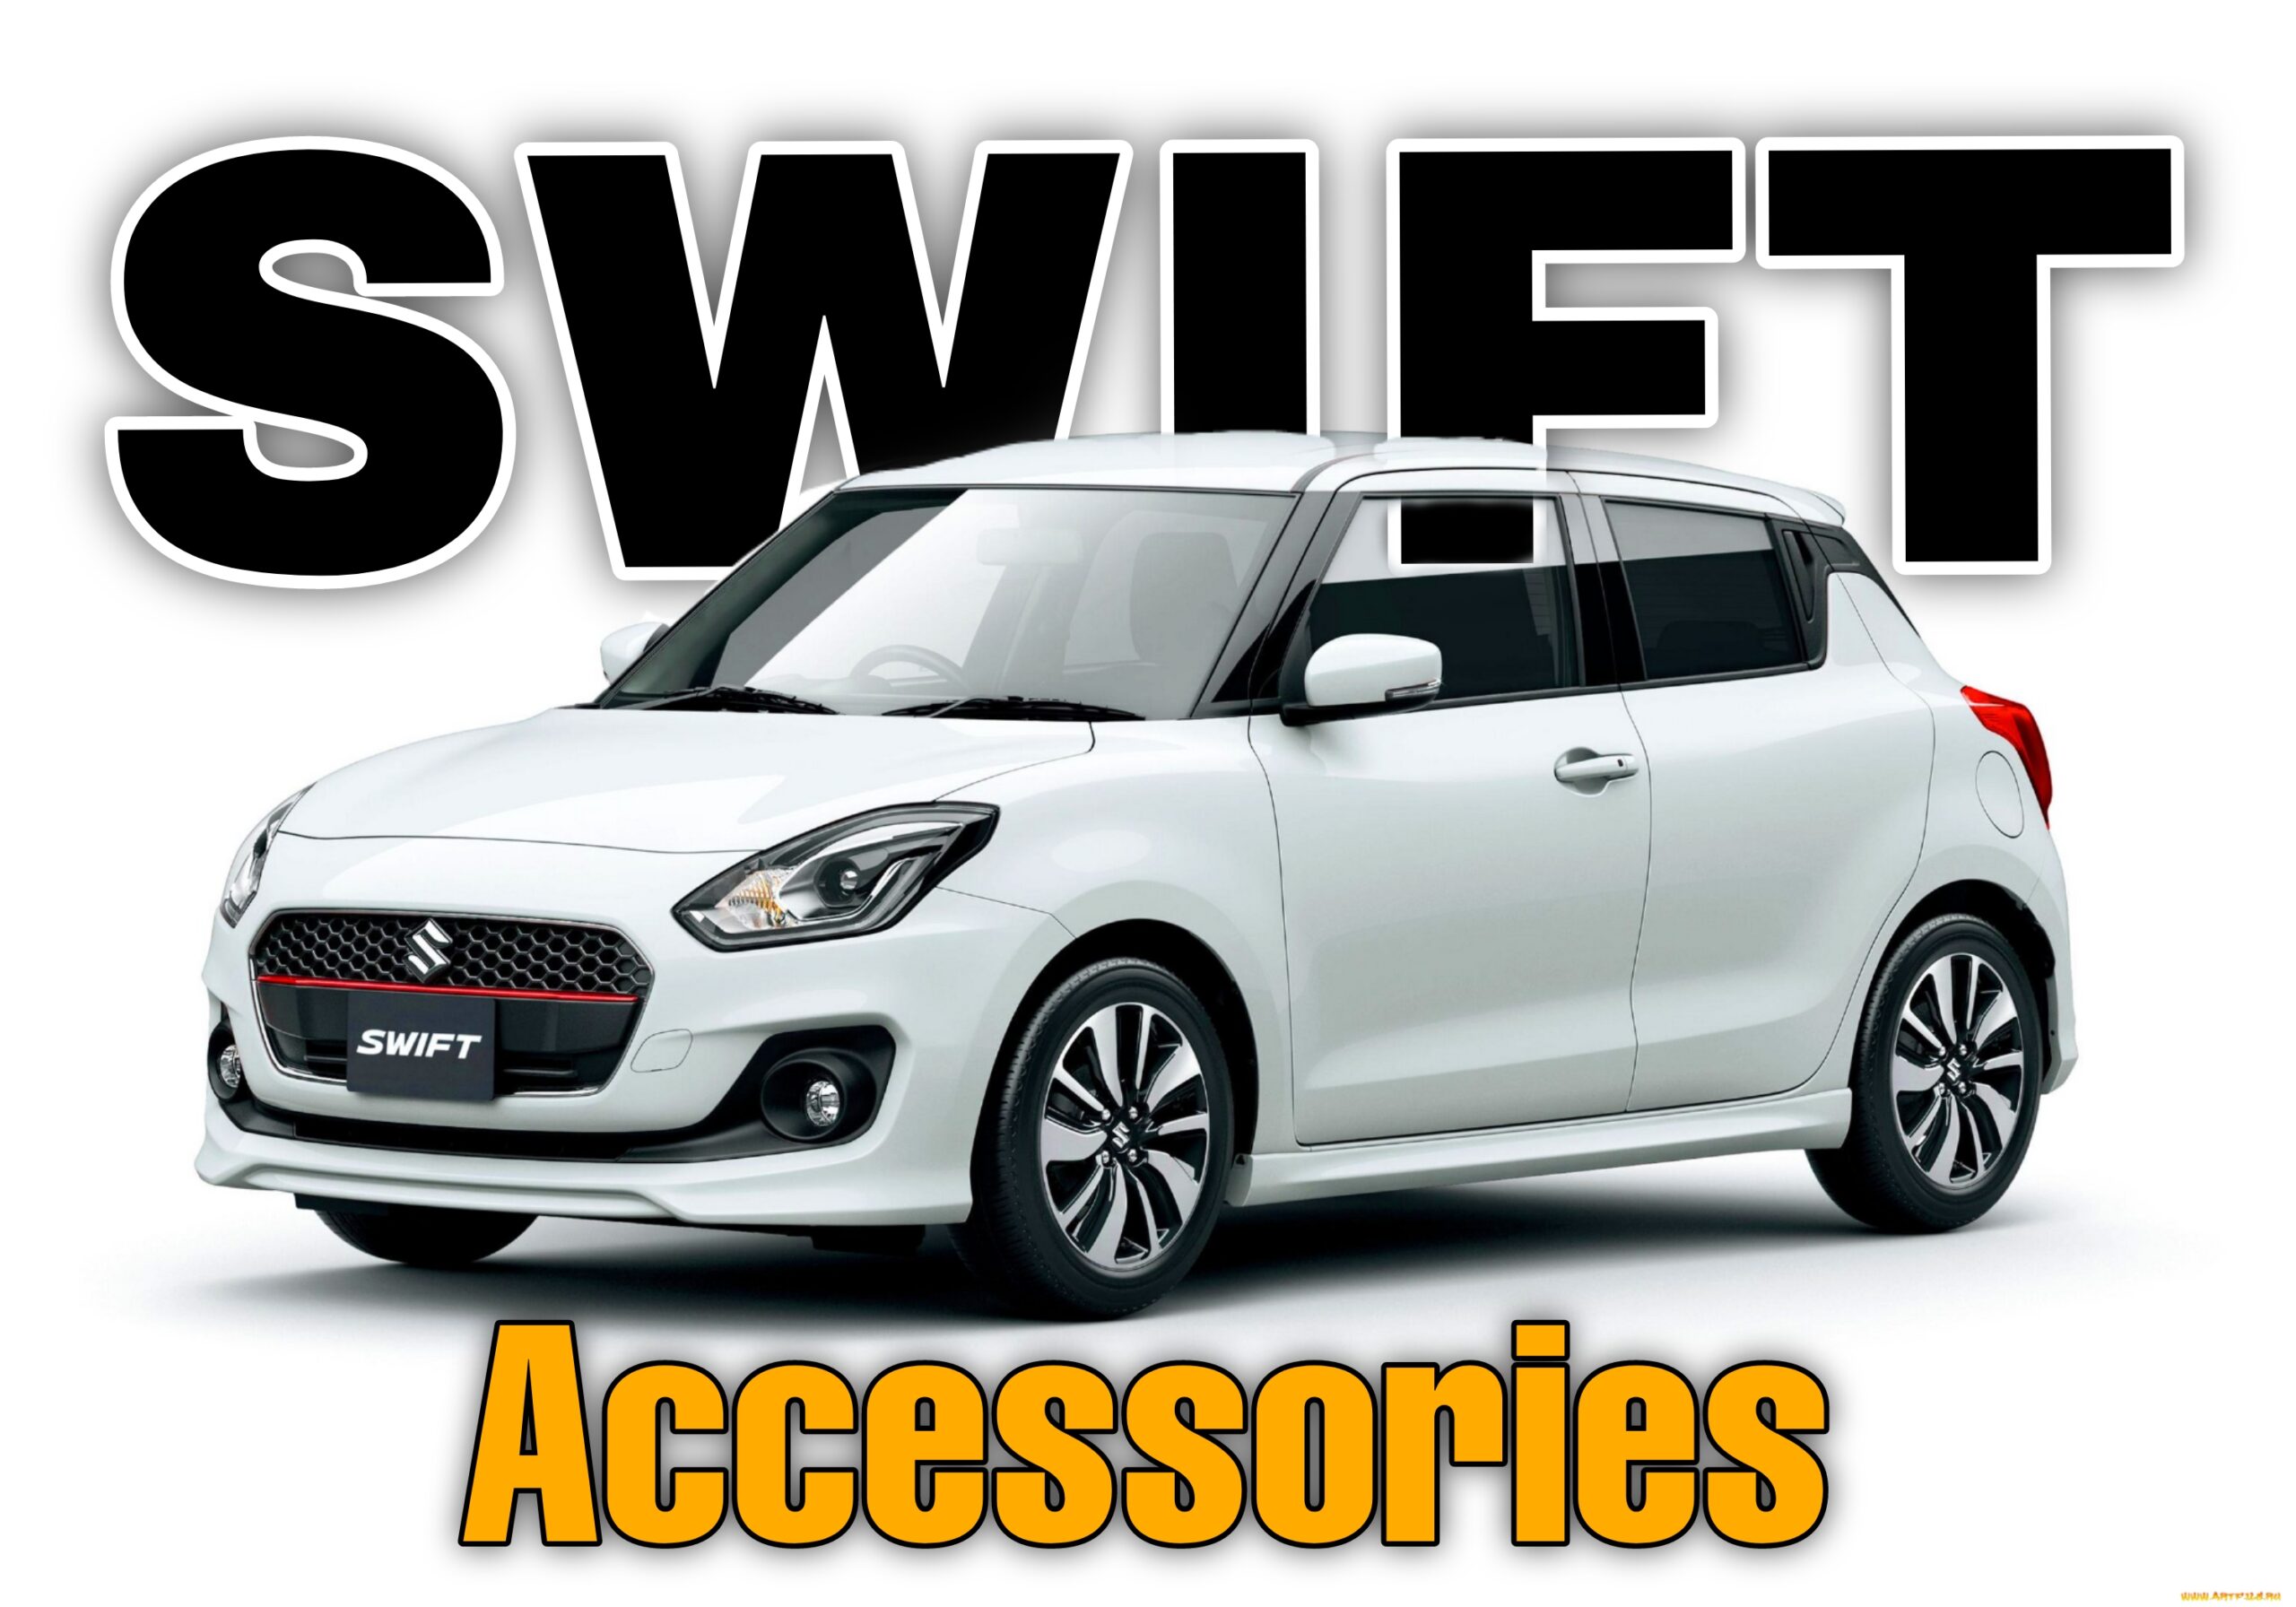 Swift Car Accessories